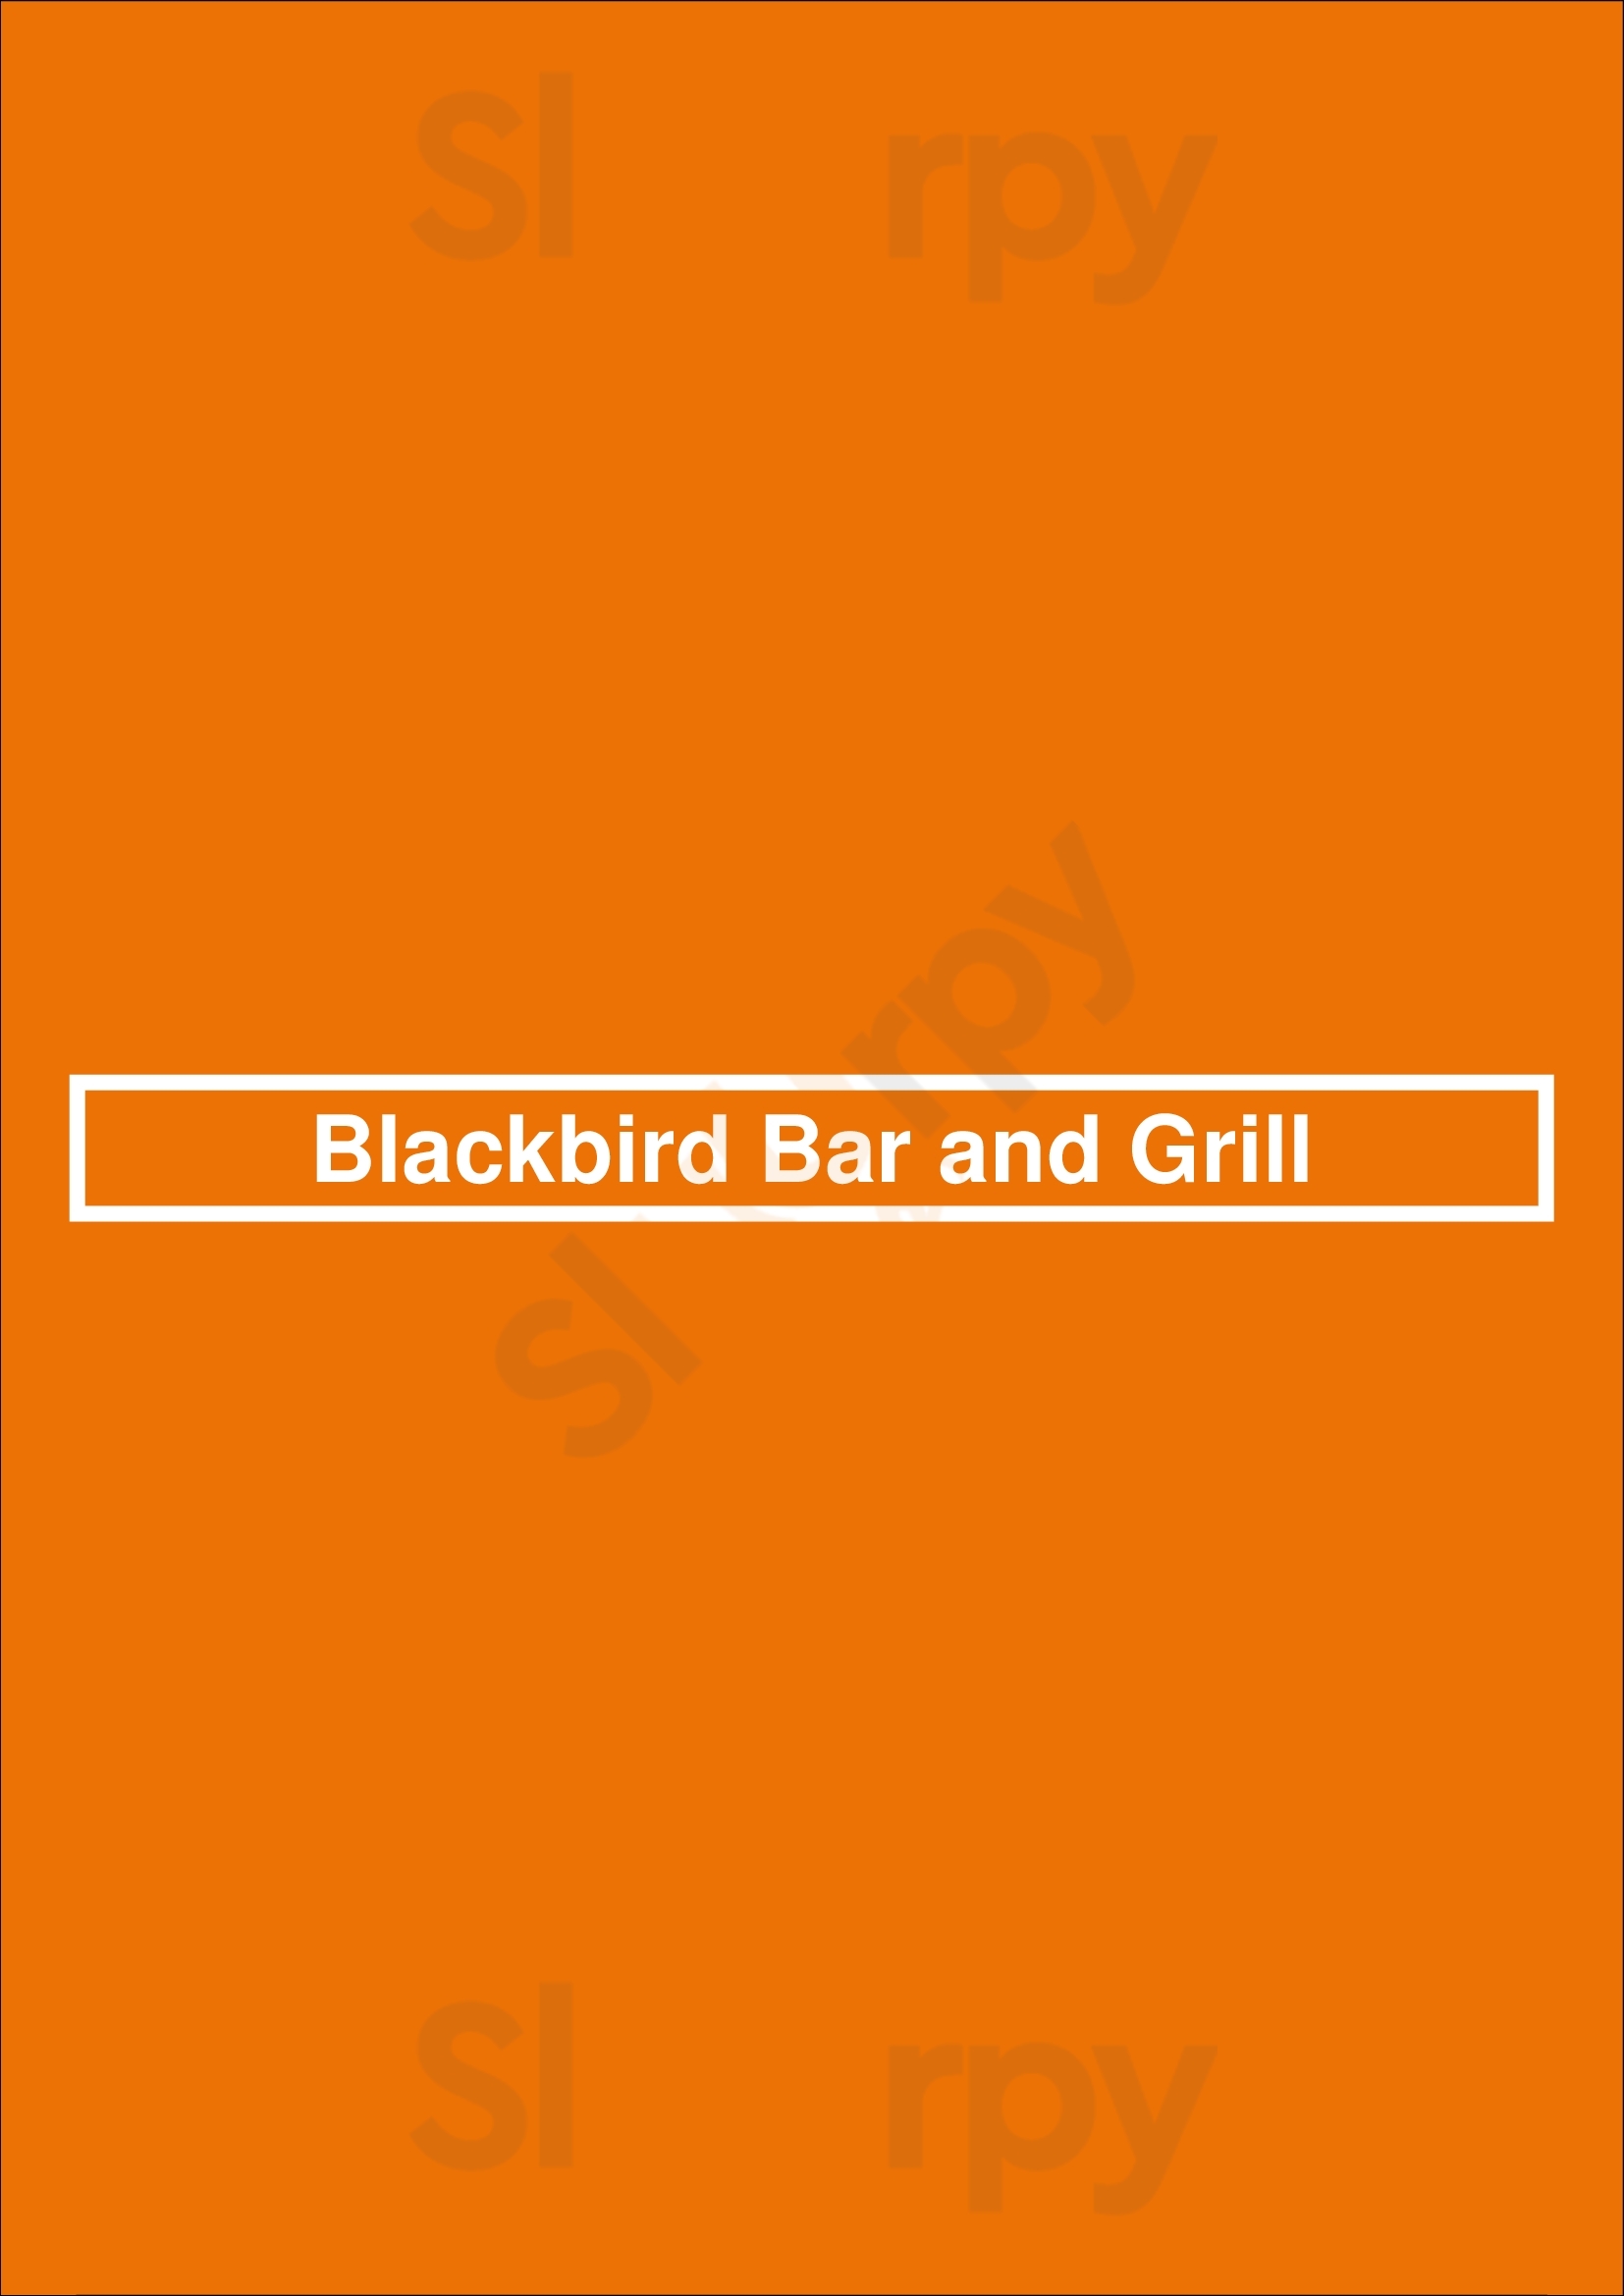 Blackbird Bar And Grill Brisbane Menu - 1